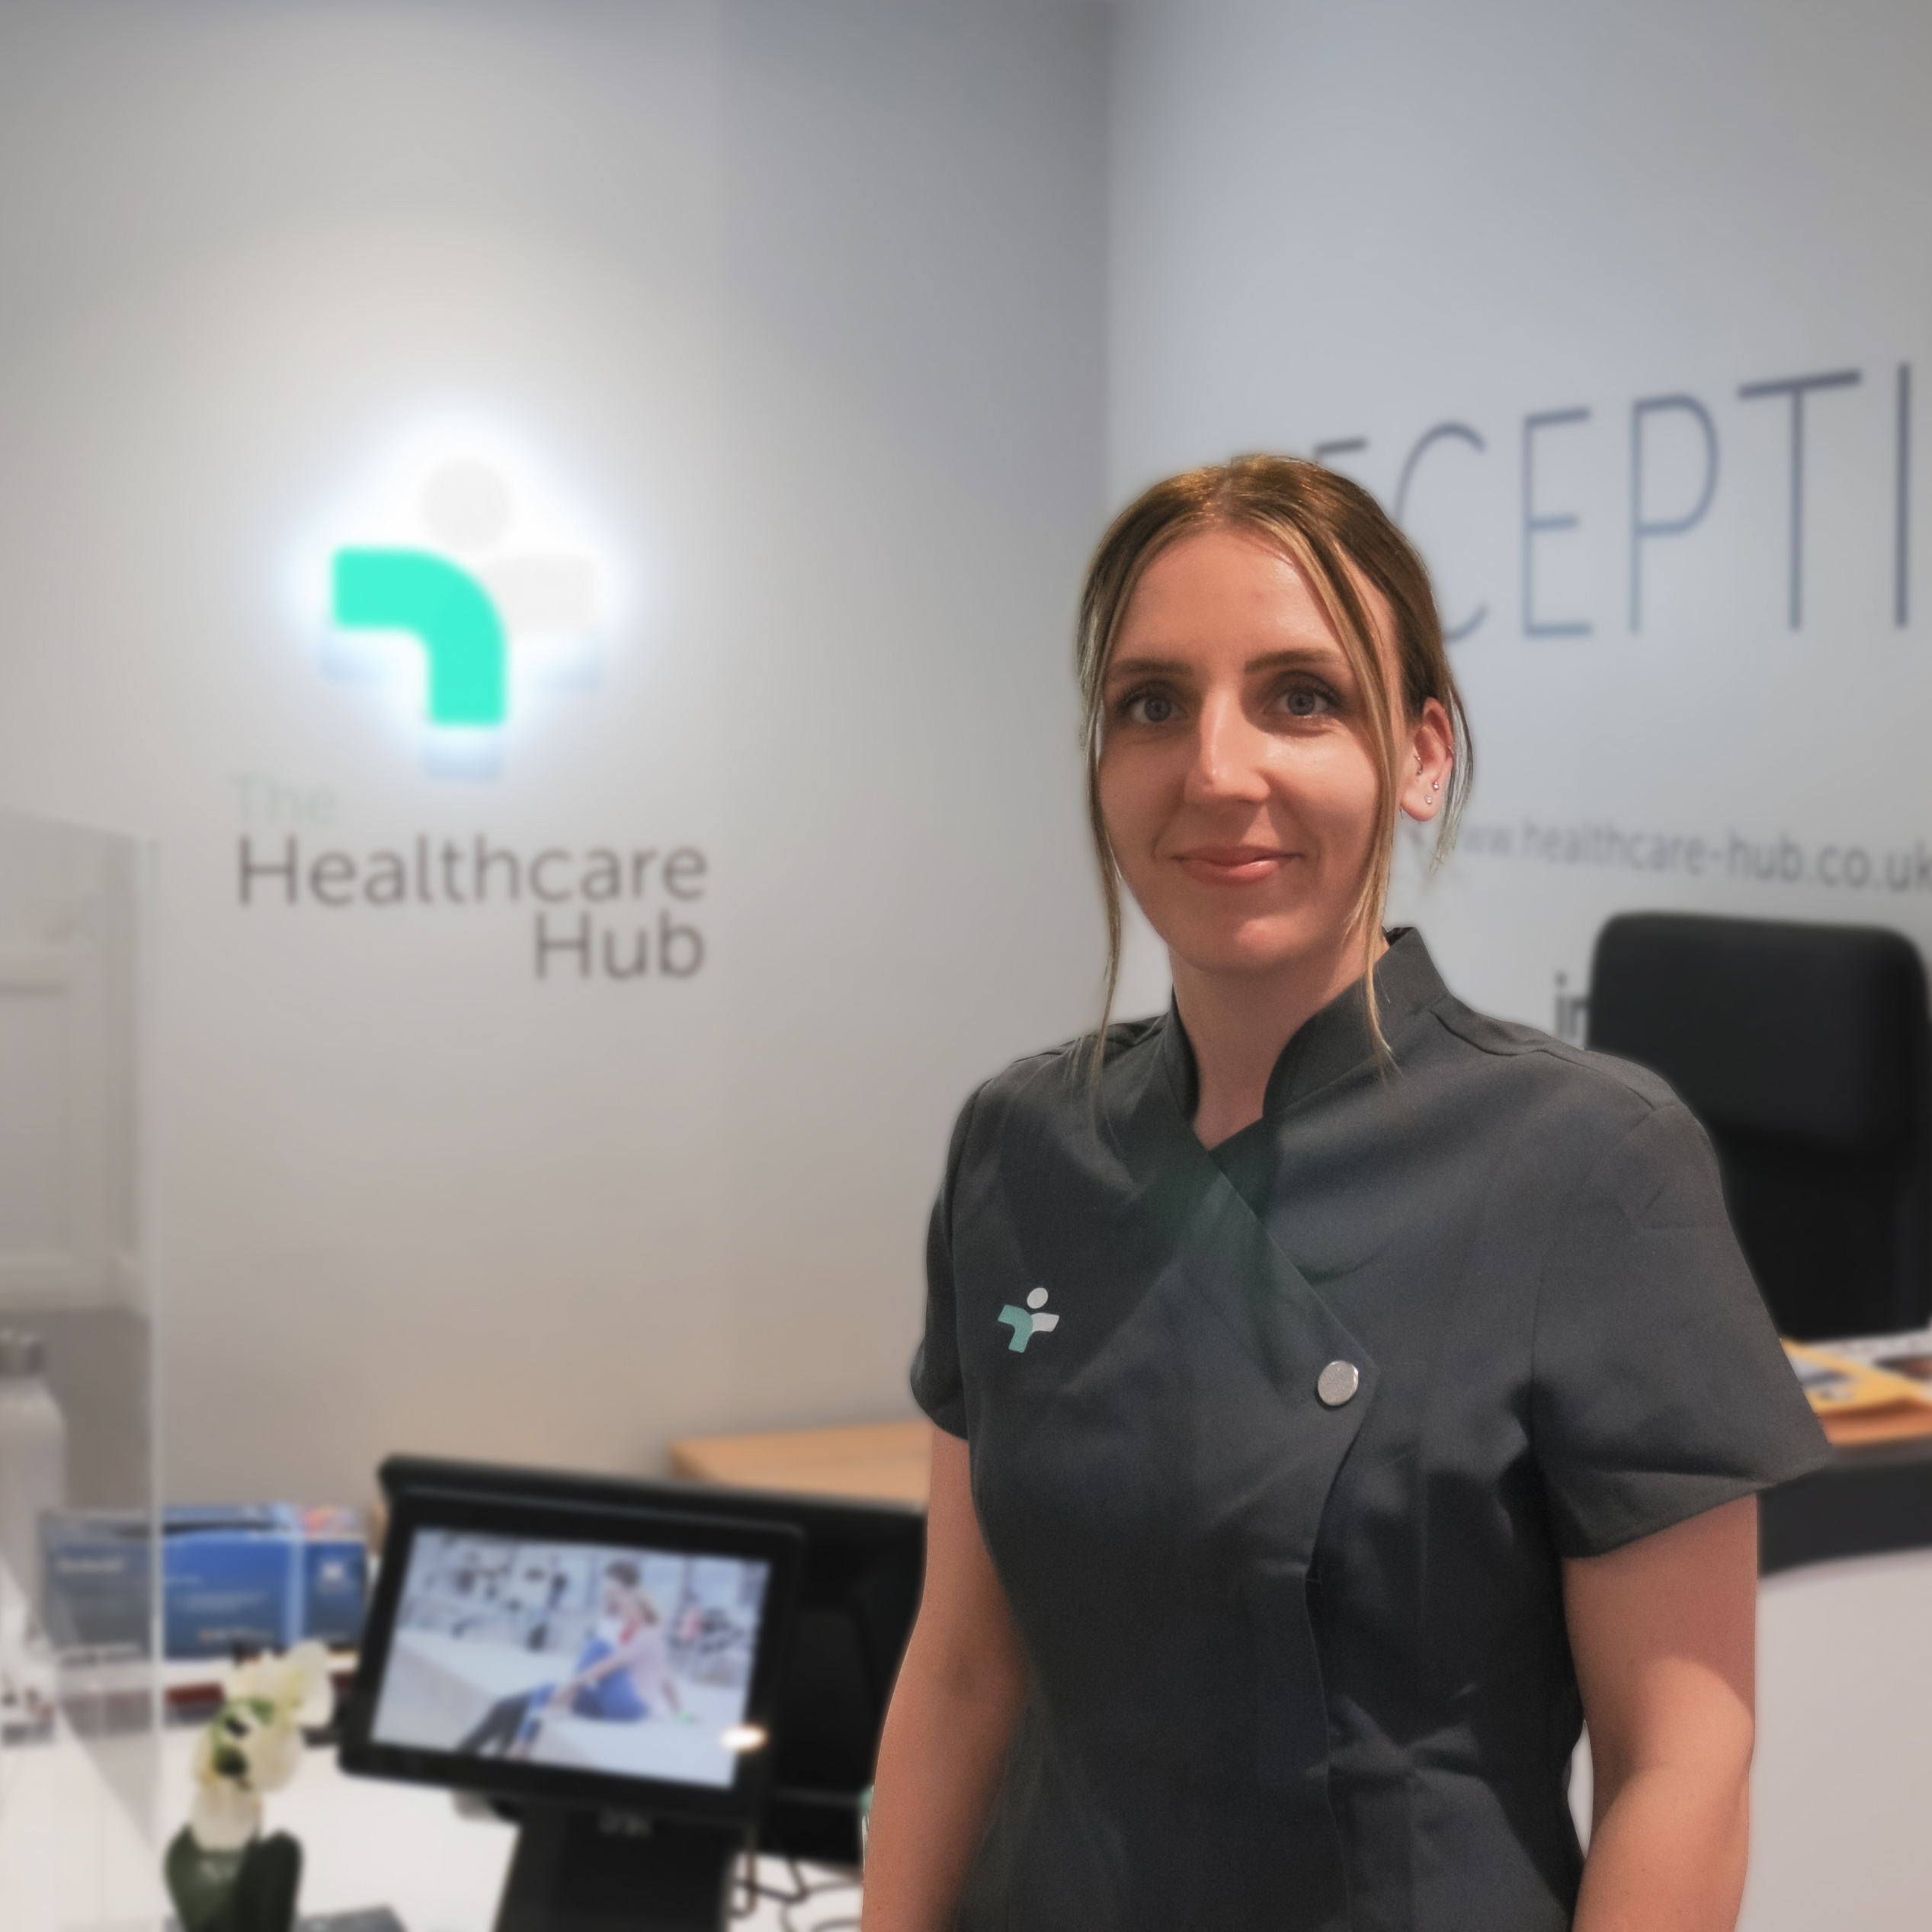 Nikita Healthcare Assistant at The Healthcare Hub Cardiff